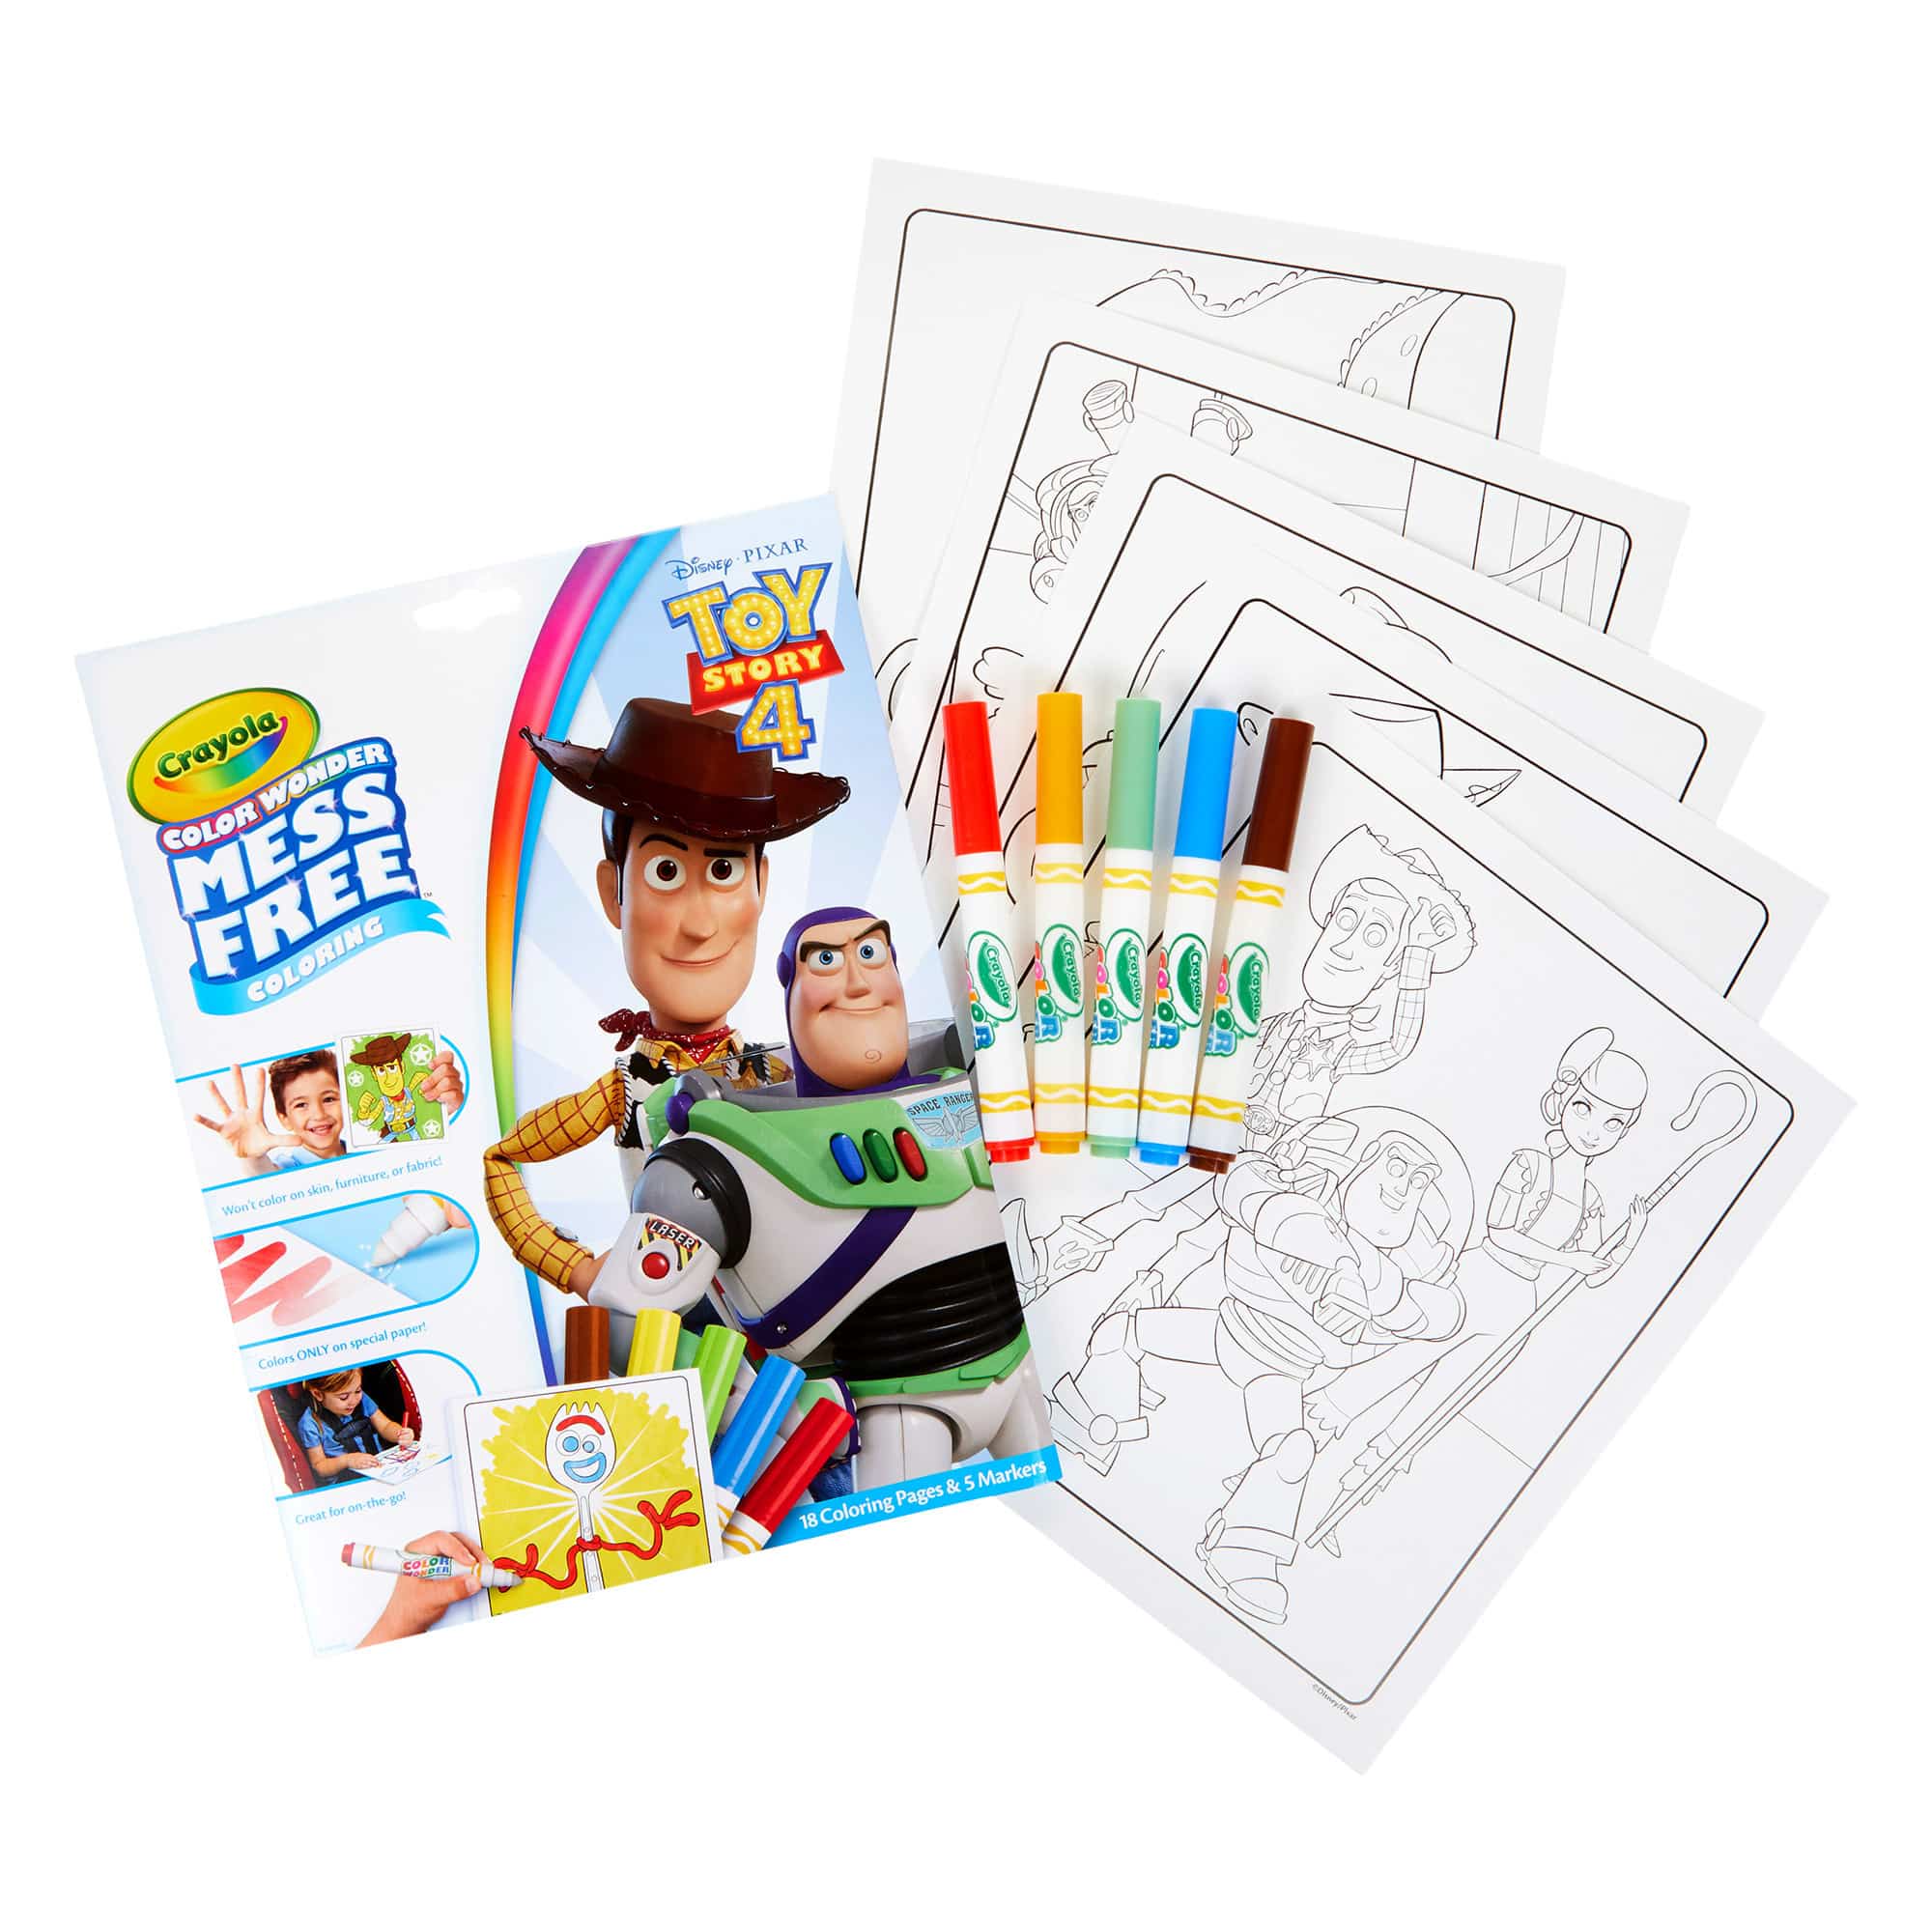 Crayola Colour Wonder - Toy Story 4